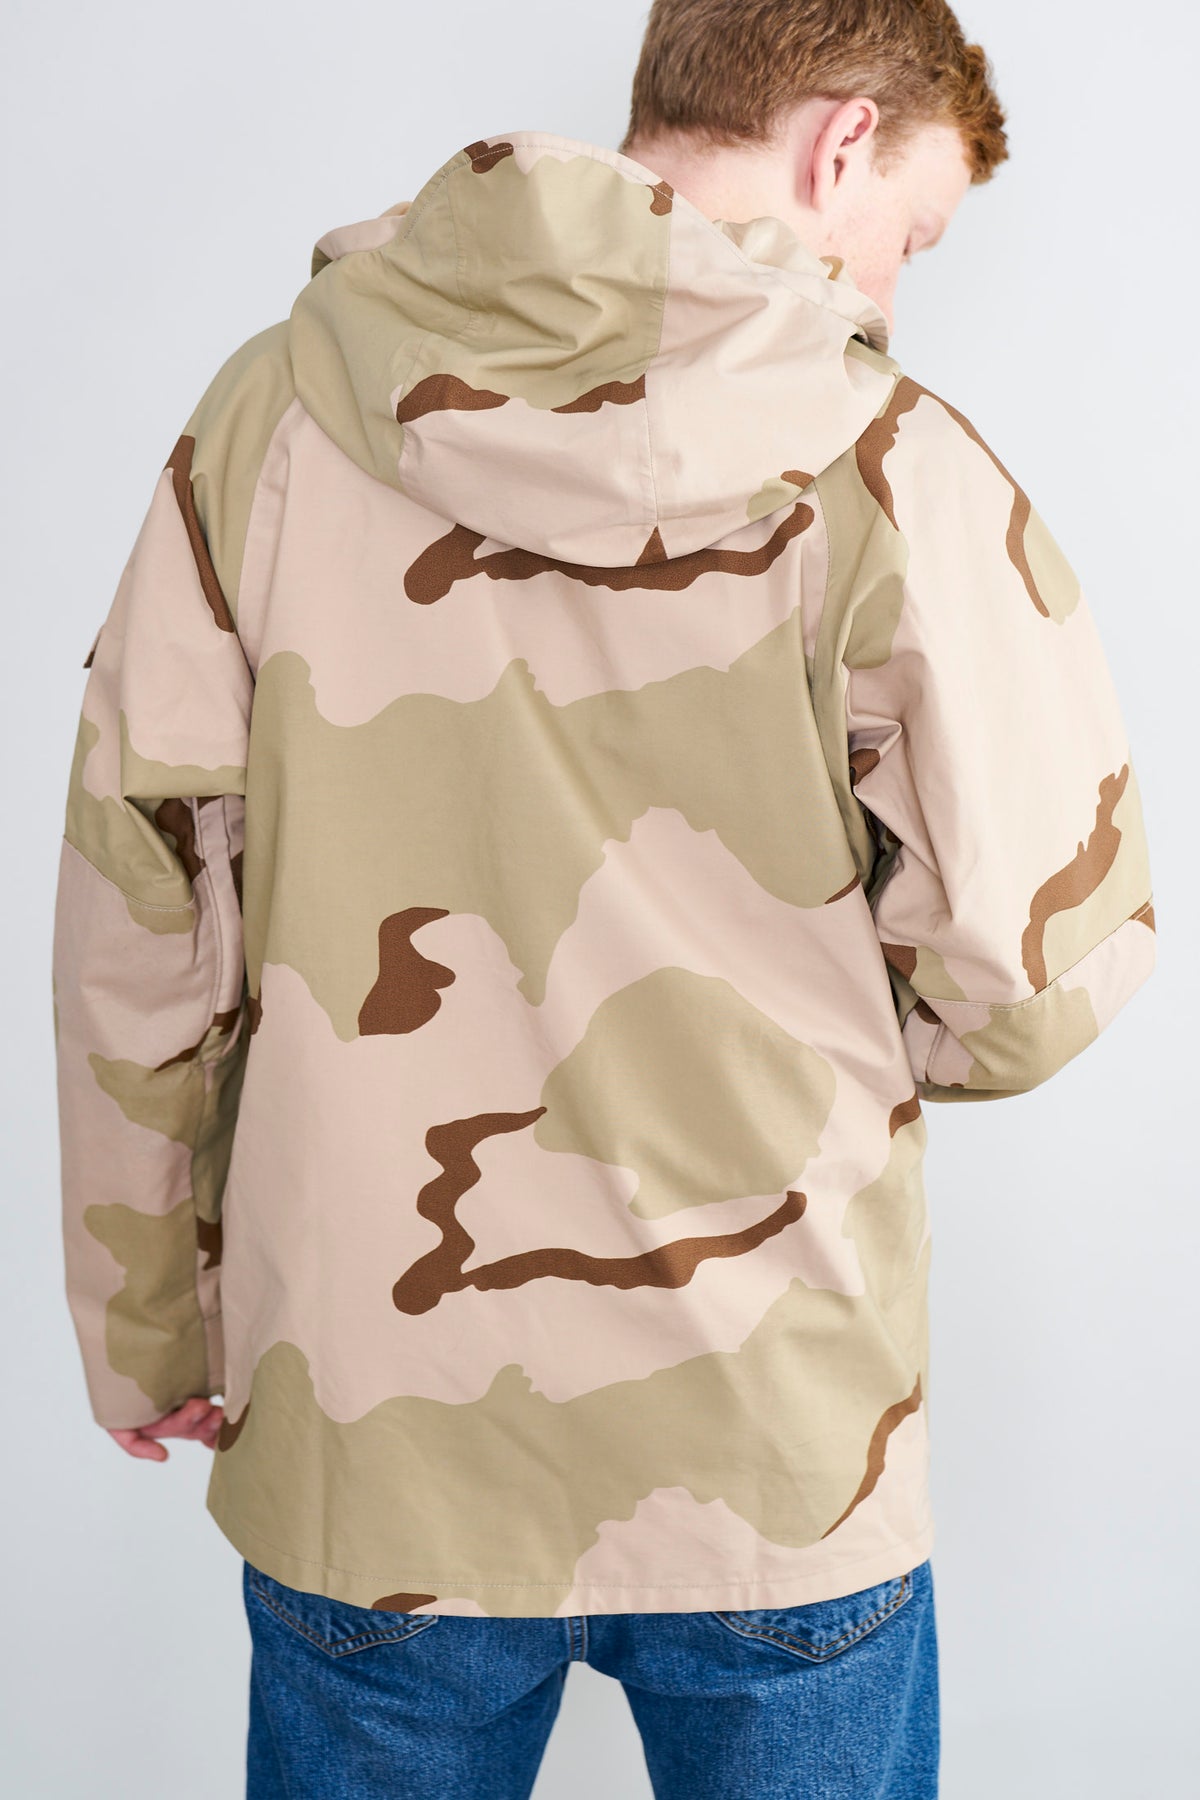 Desert Storm USA Camo jacket